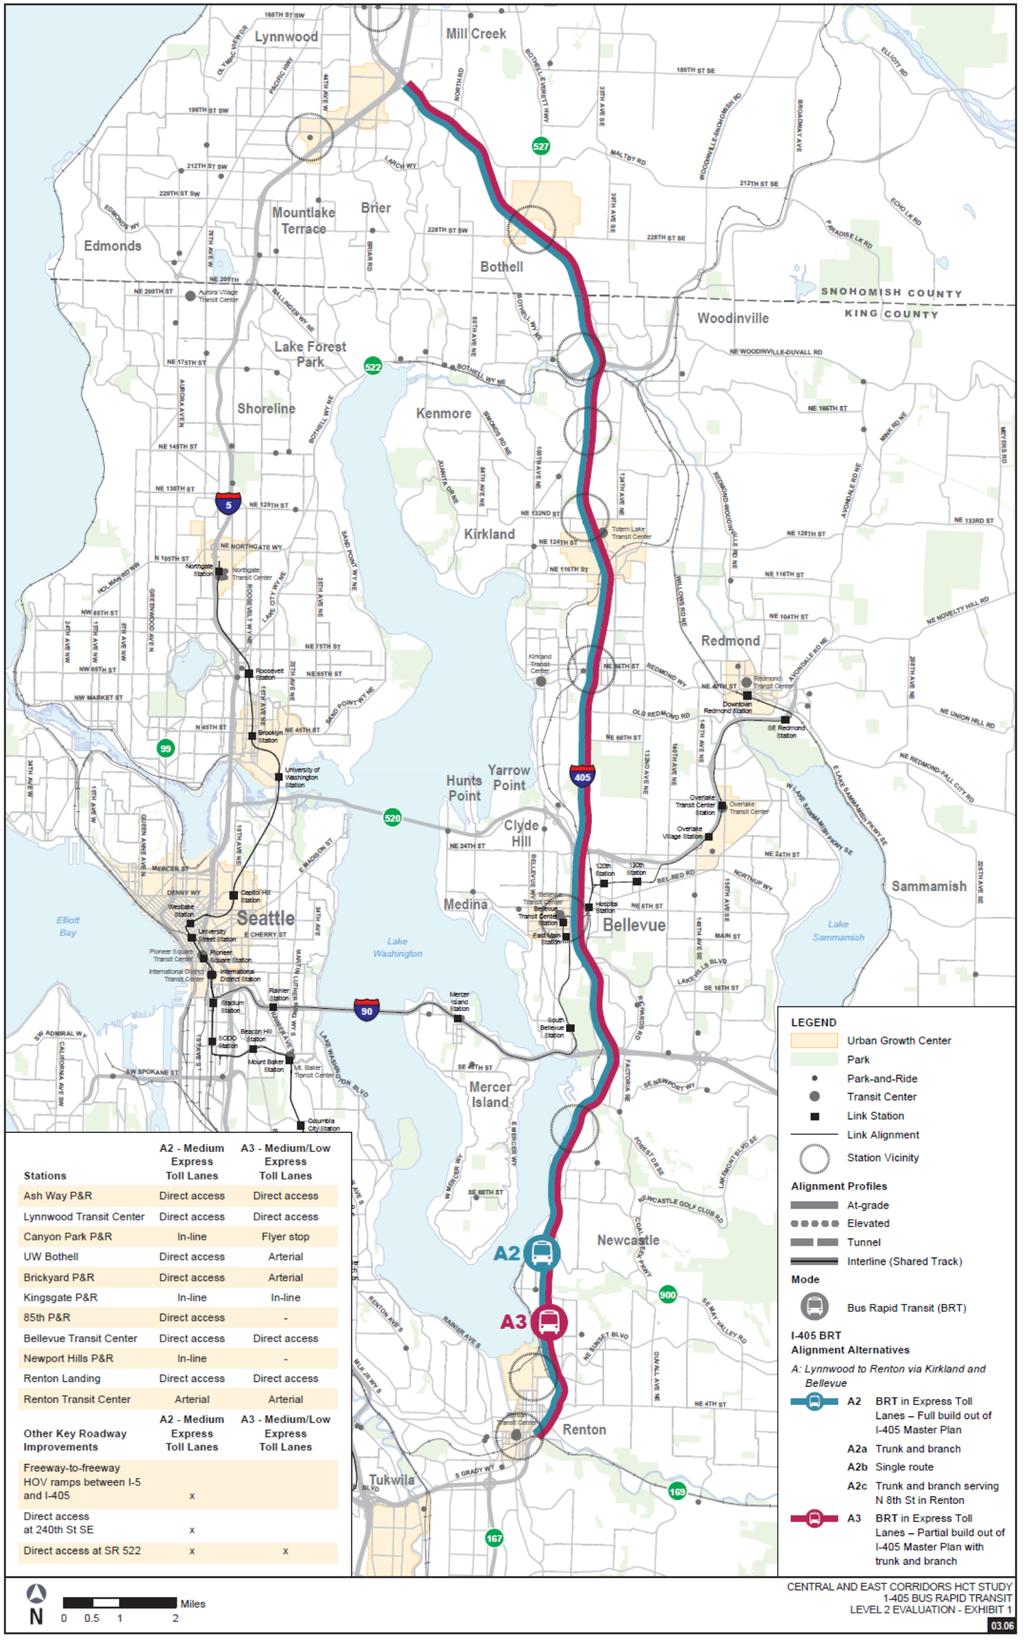 Sound Transit Central/East High Capacity Transit Corridor Study